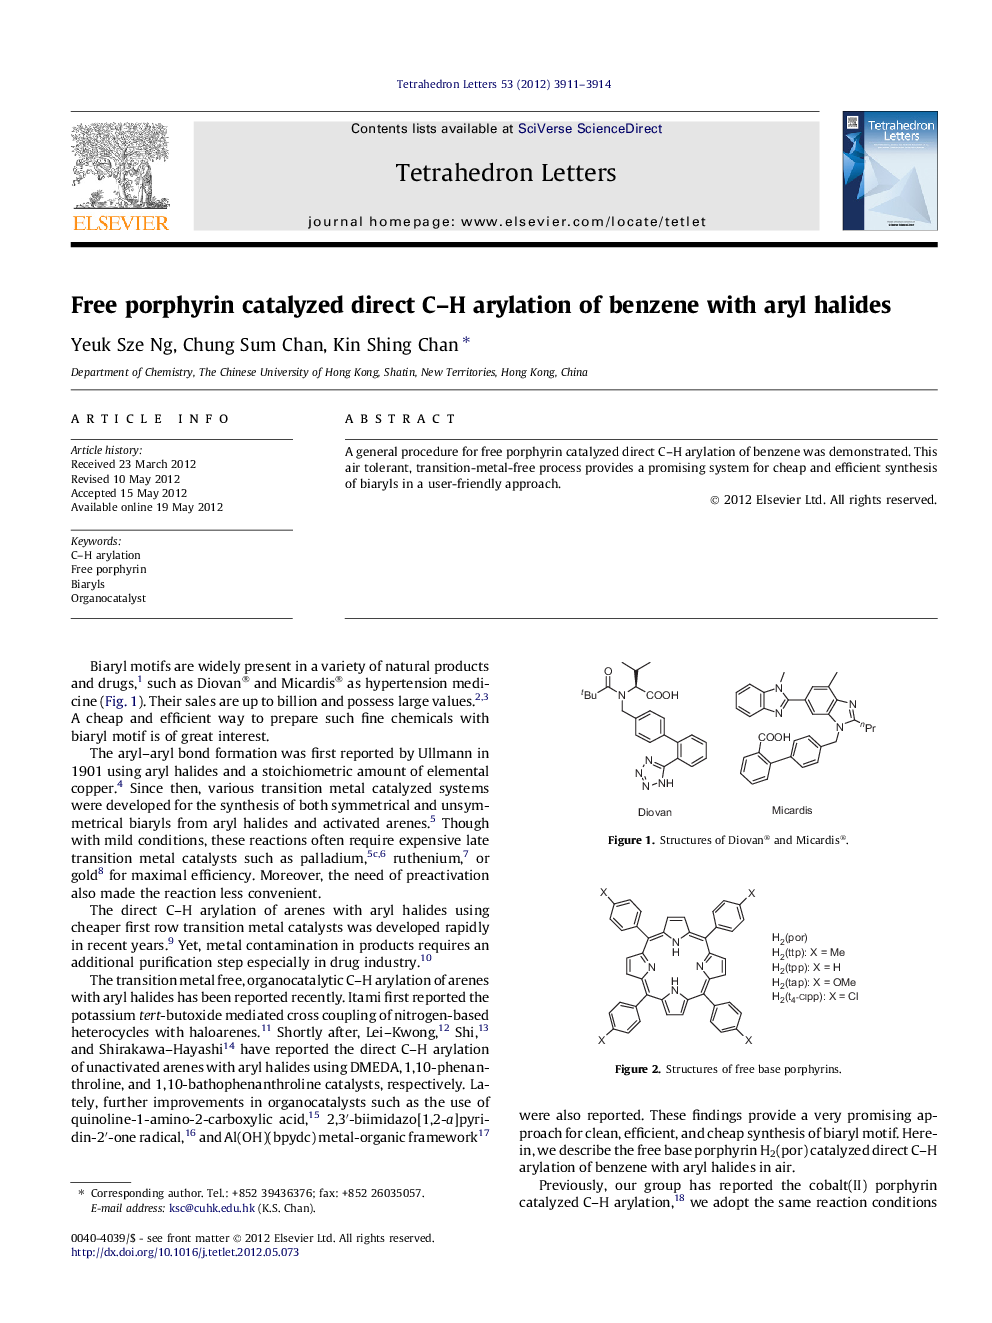 Free porphyrin catalyzed direct C-H arylation of benzene with aryl halides